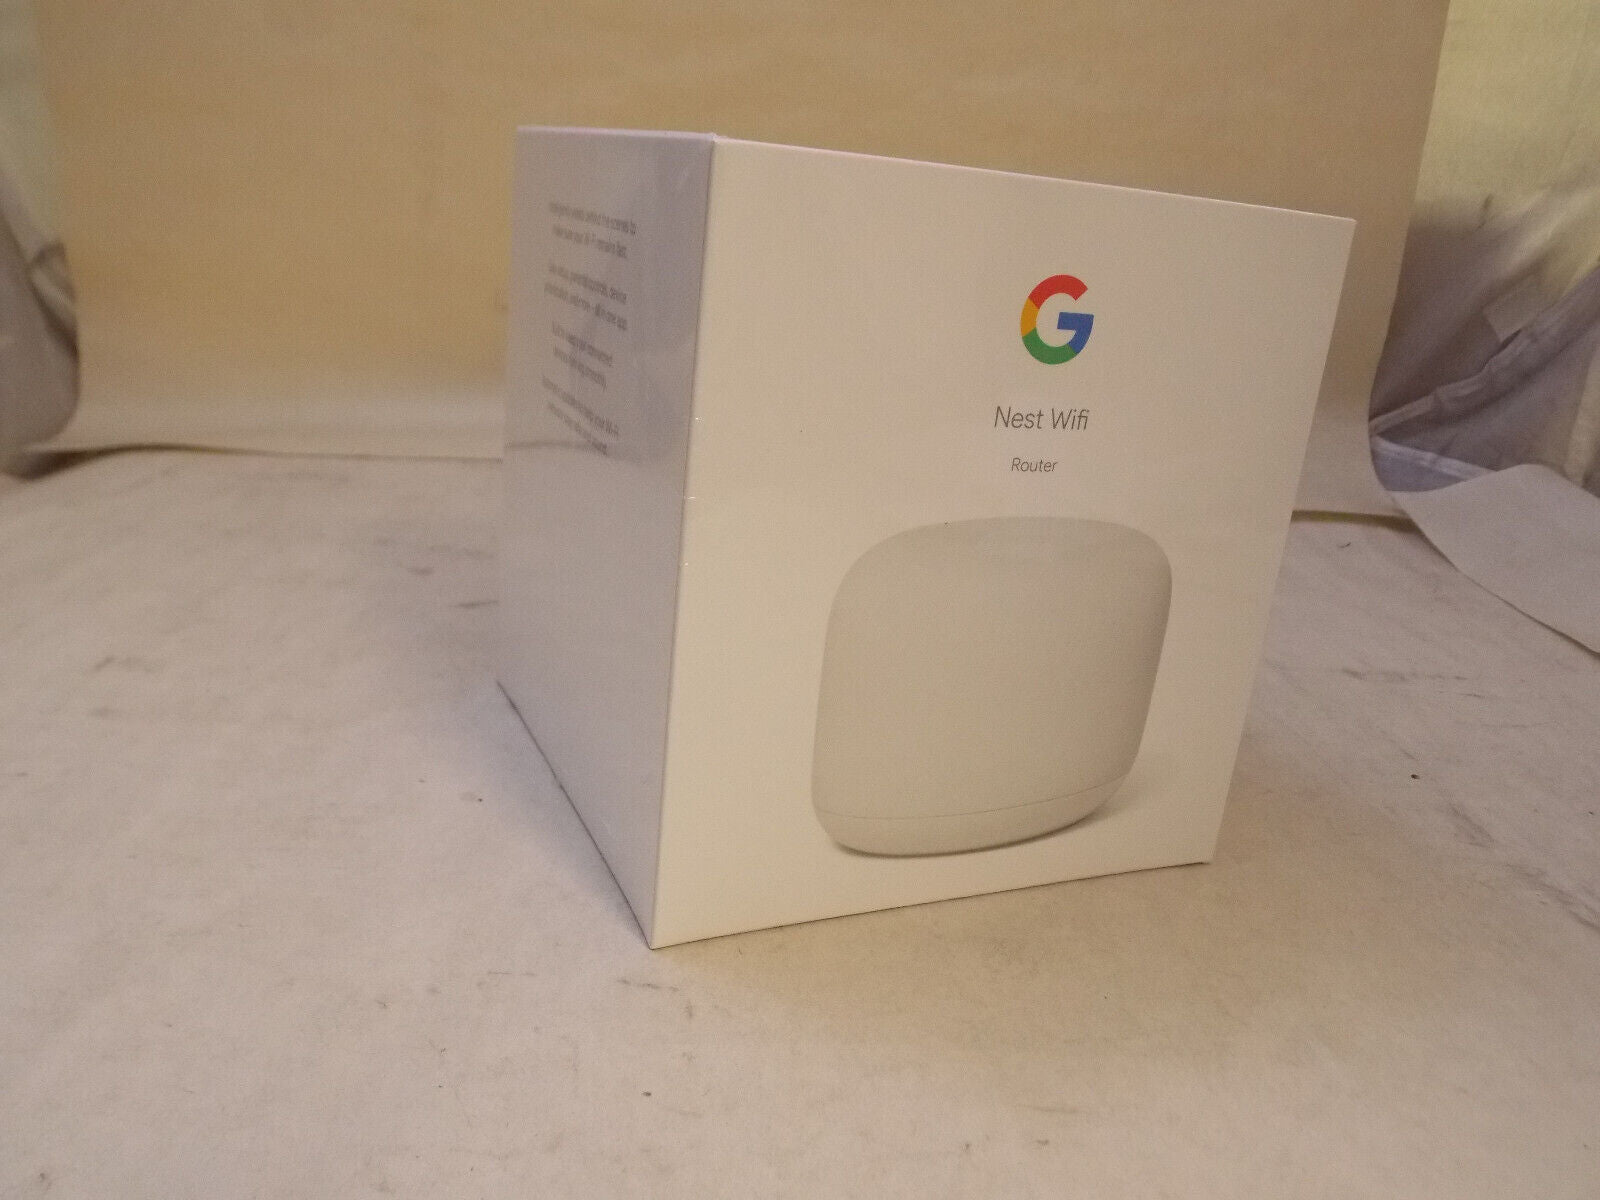 Google Nest Router - GA00595-US for sale online